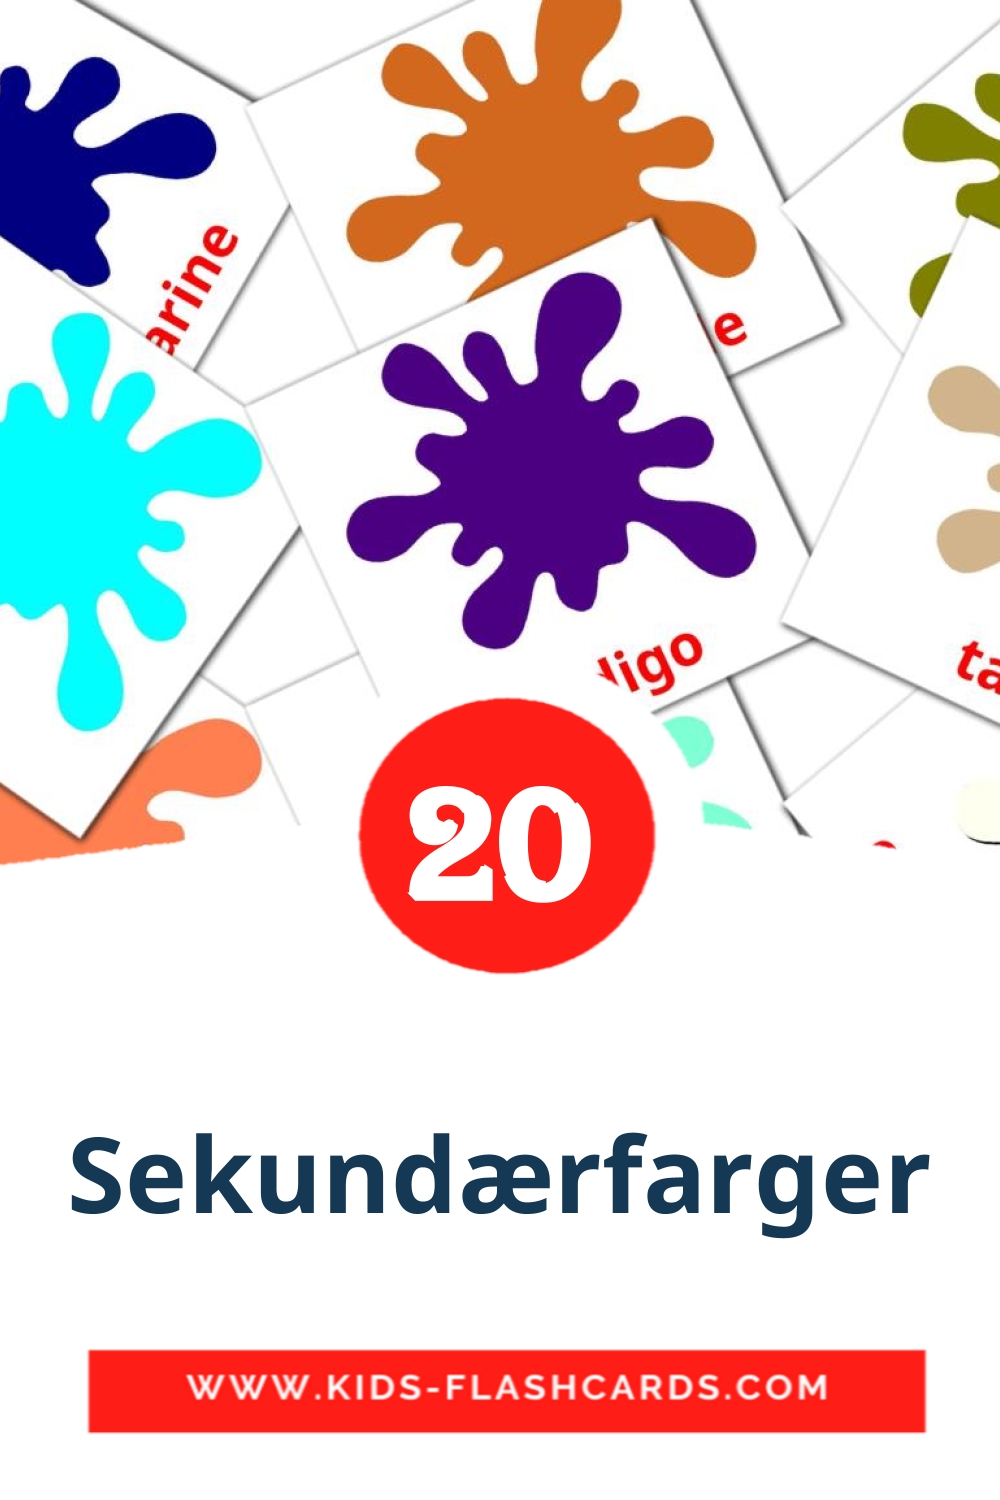 20 carte illustrate di Sekundærfarger per la scuola materna in norvegese